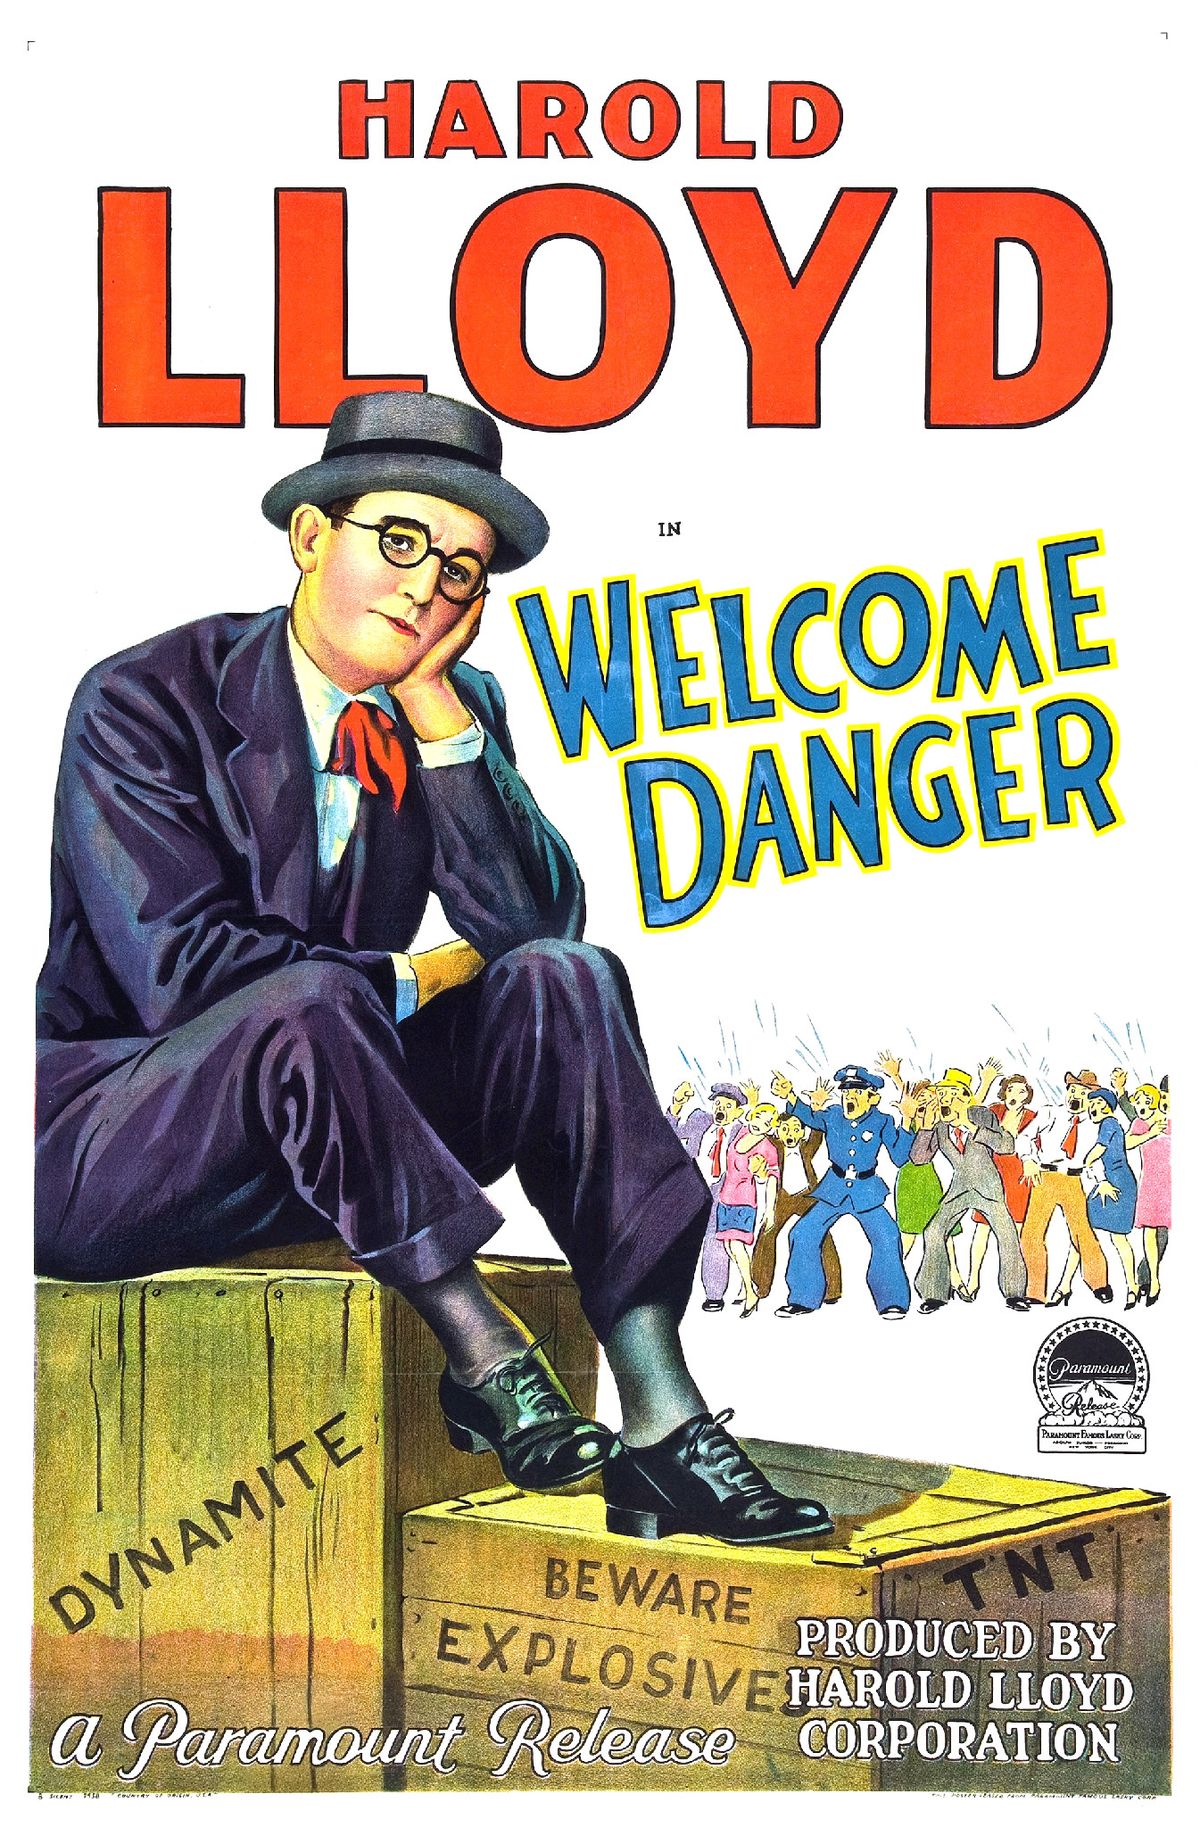 Harold Lloyd 30